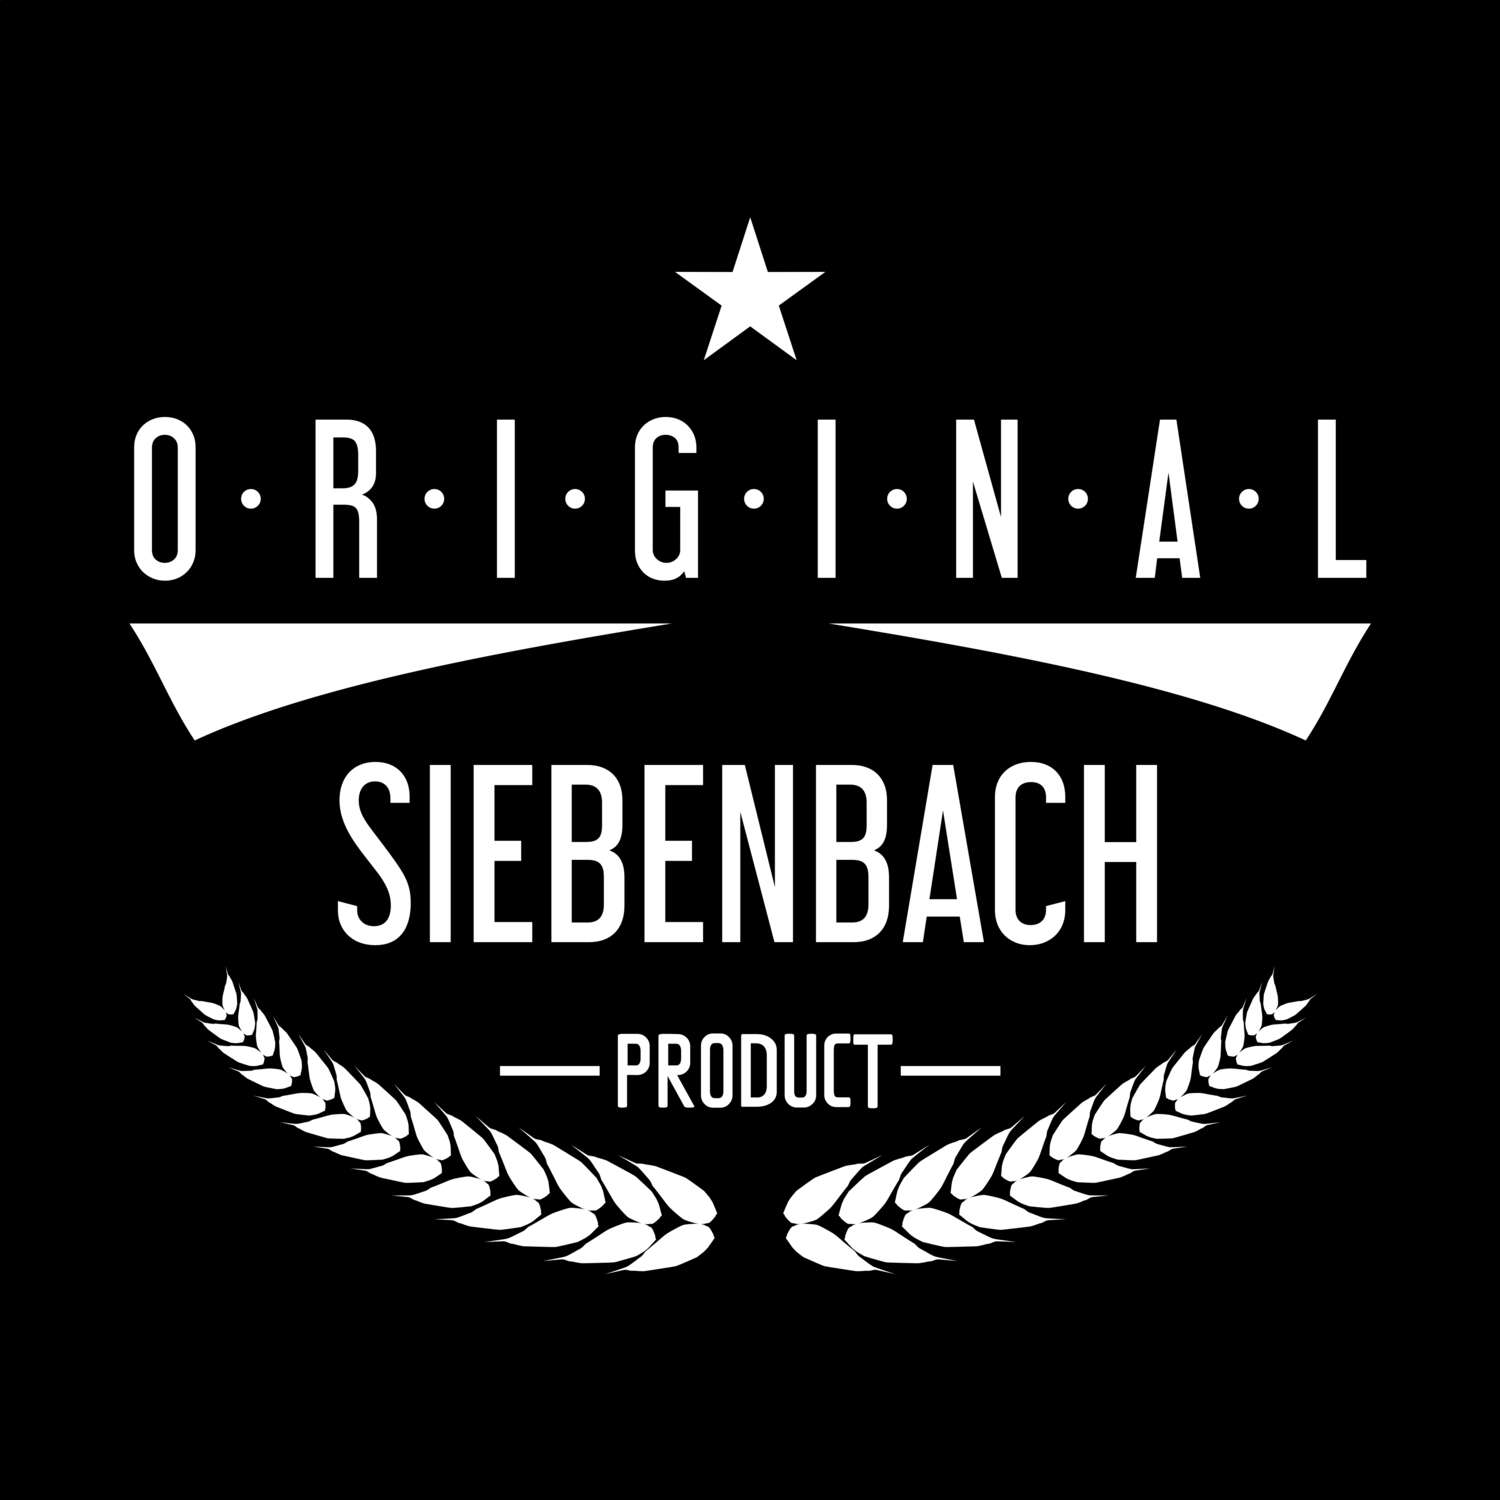 Siebenbach T-Shirt »Original Product«